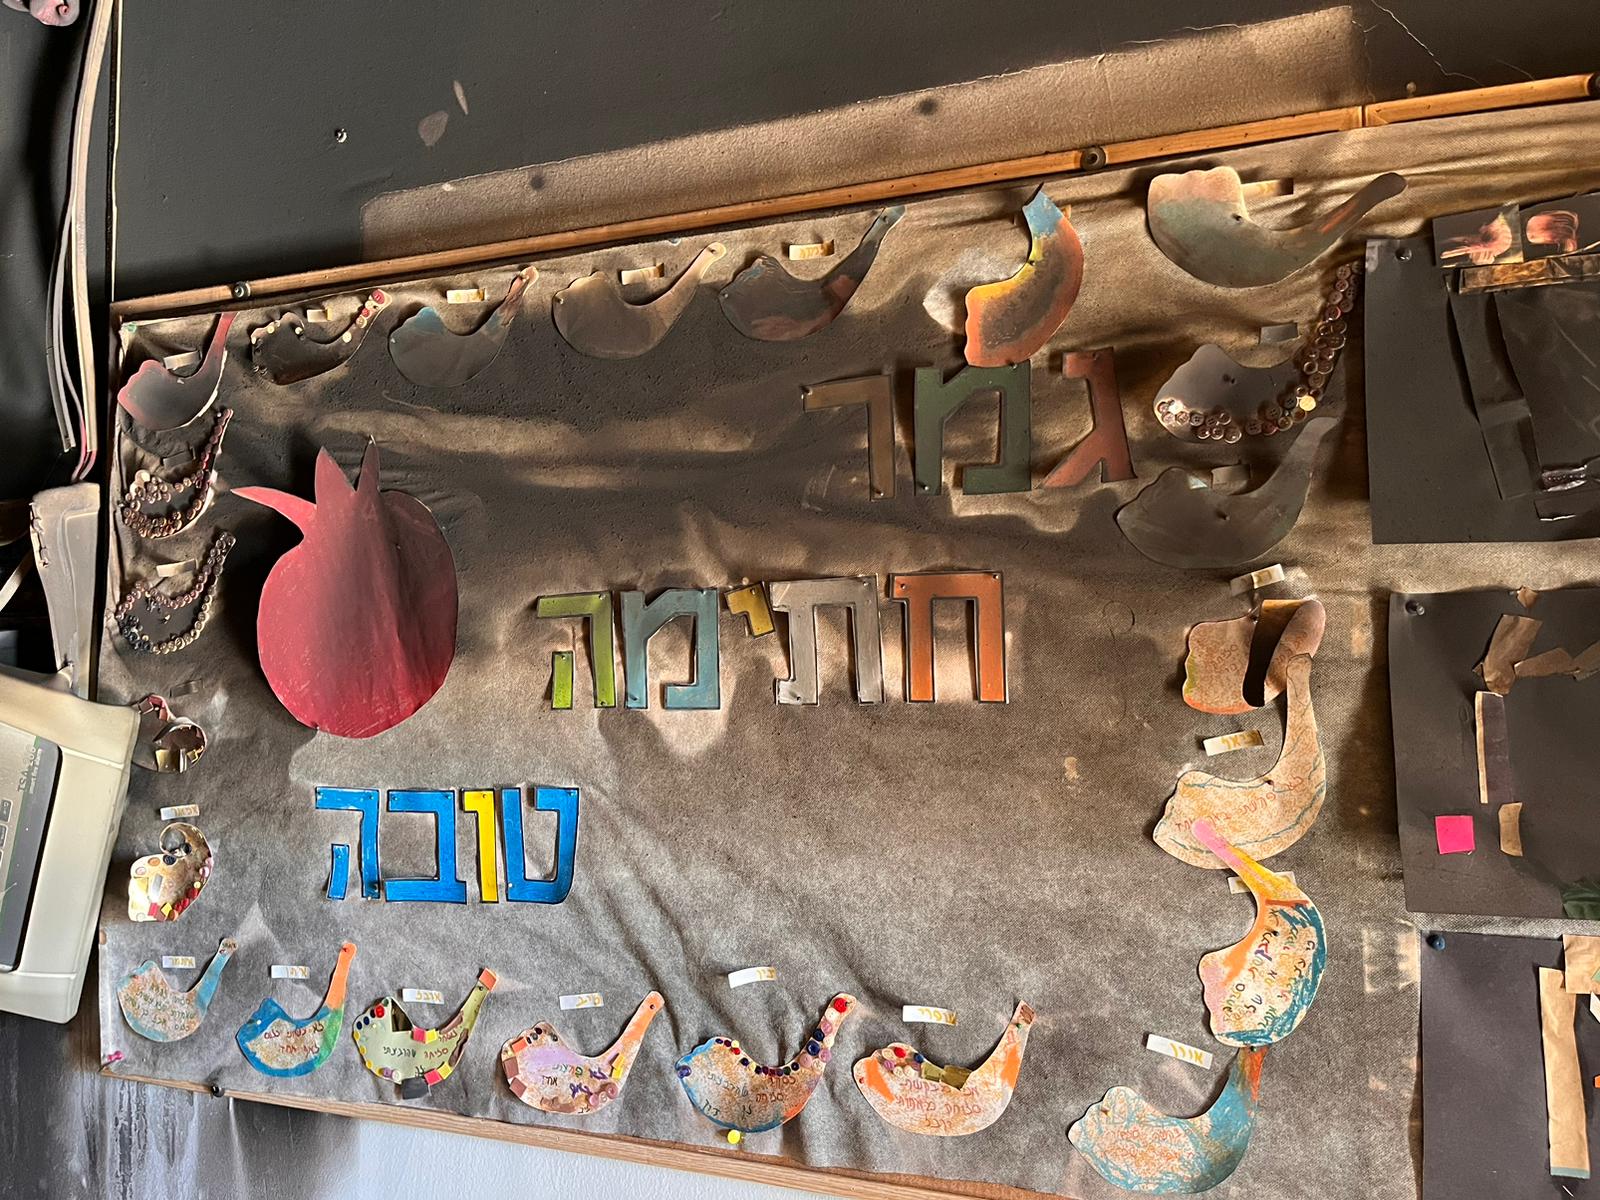 The scorched bulletin board and holiday decorations at the Tut Kindergarten on Kibbutz Nir Oz (Photo: Oren Dagan).